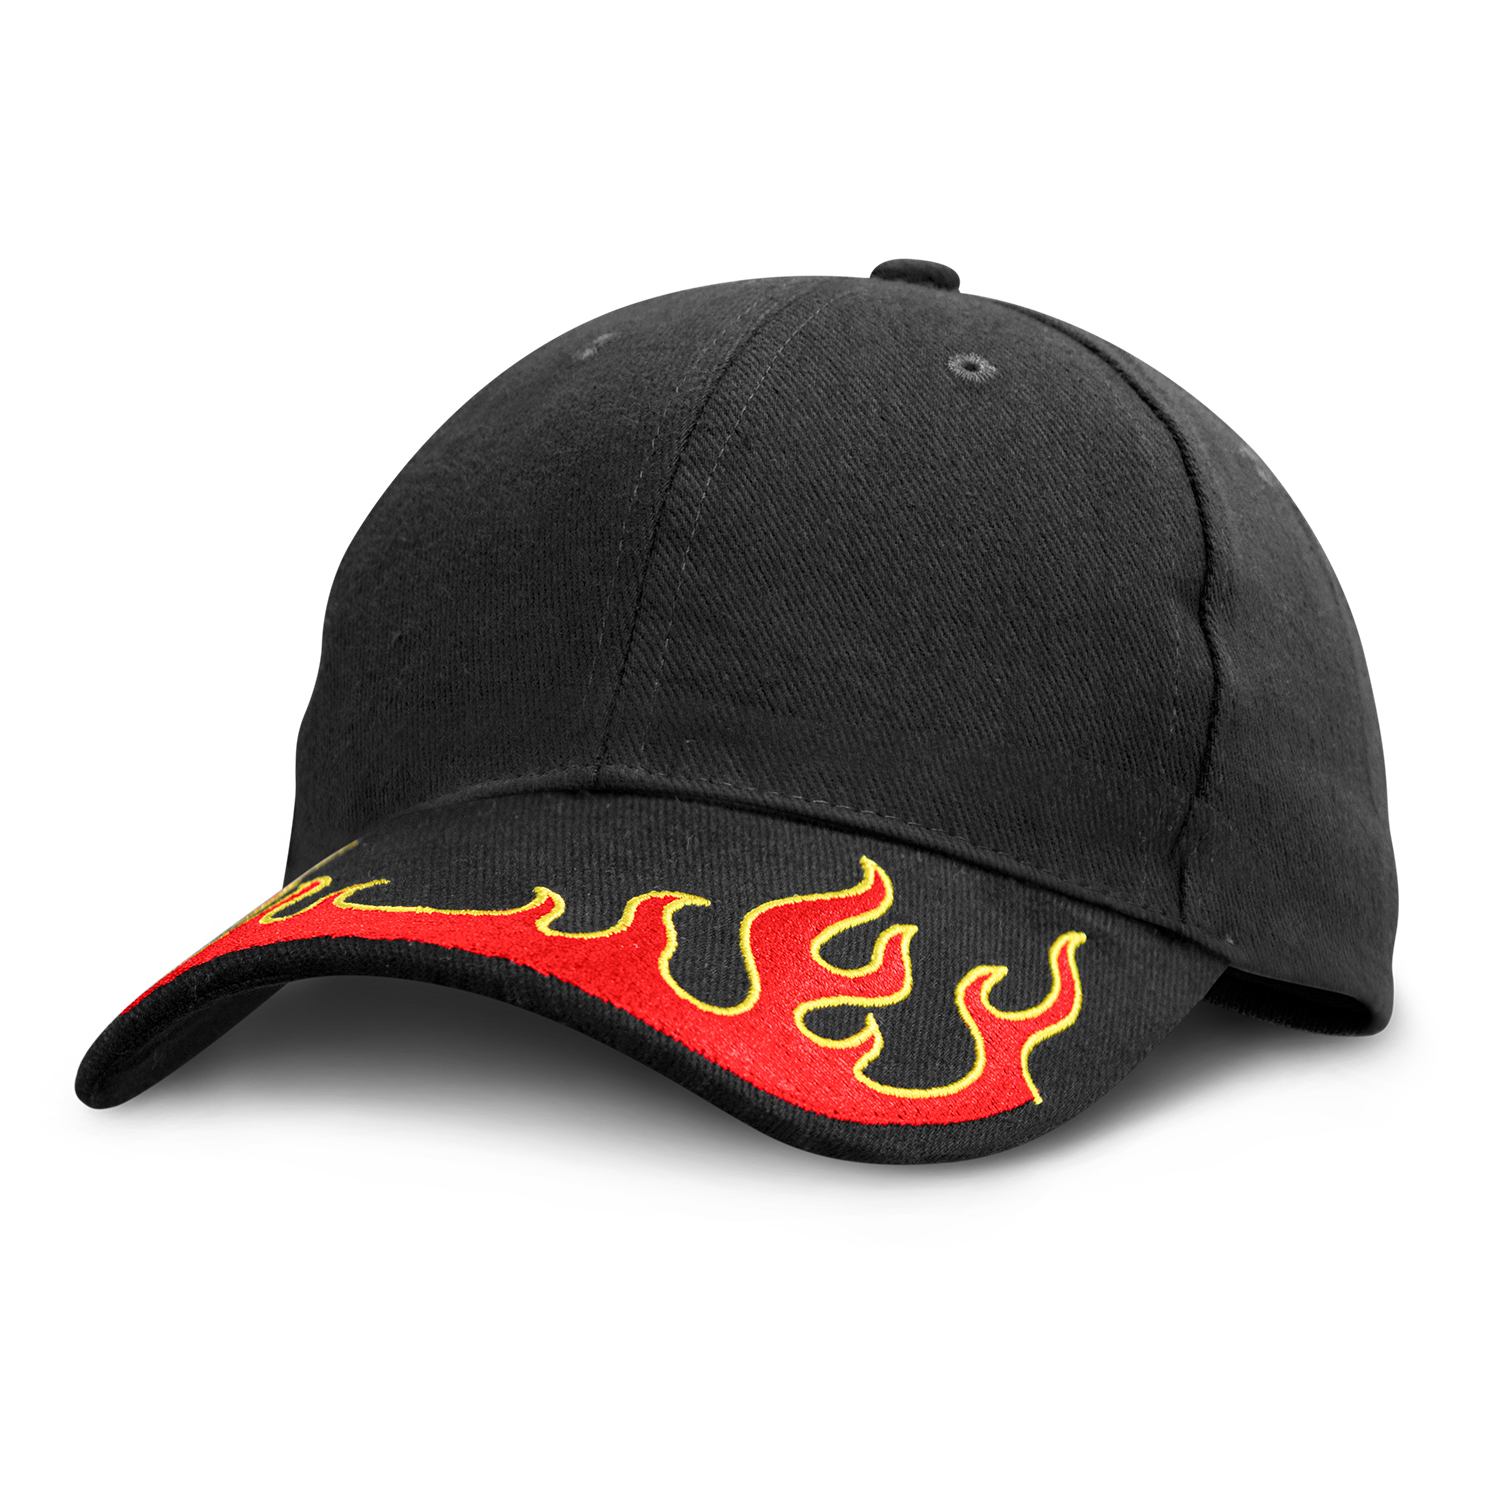 Headwear Express Diablo Cap cap